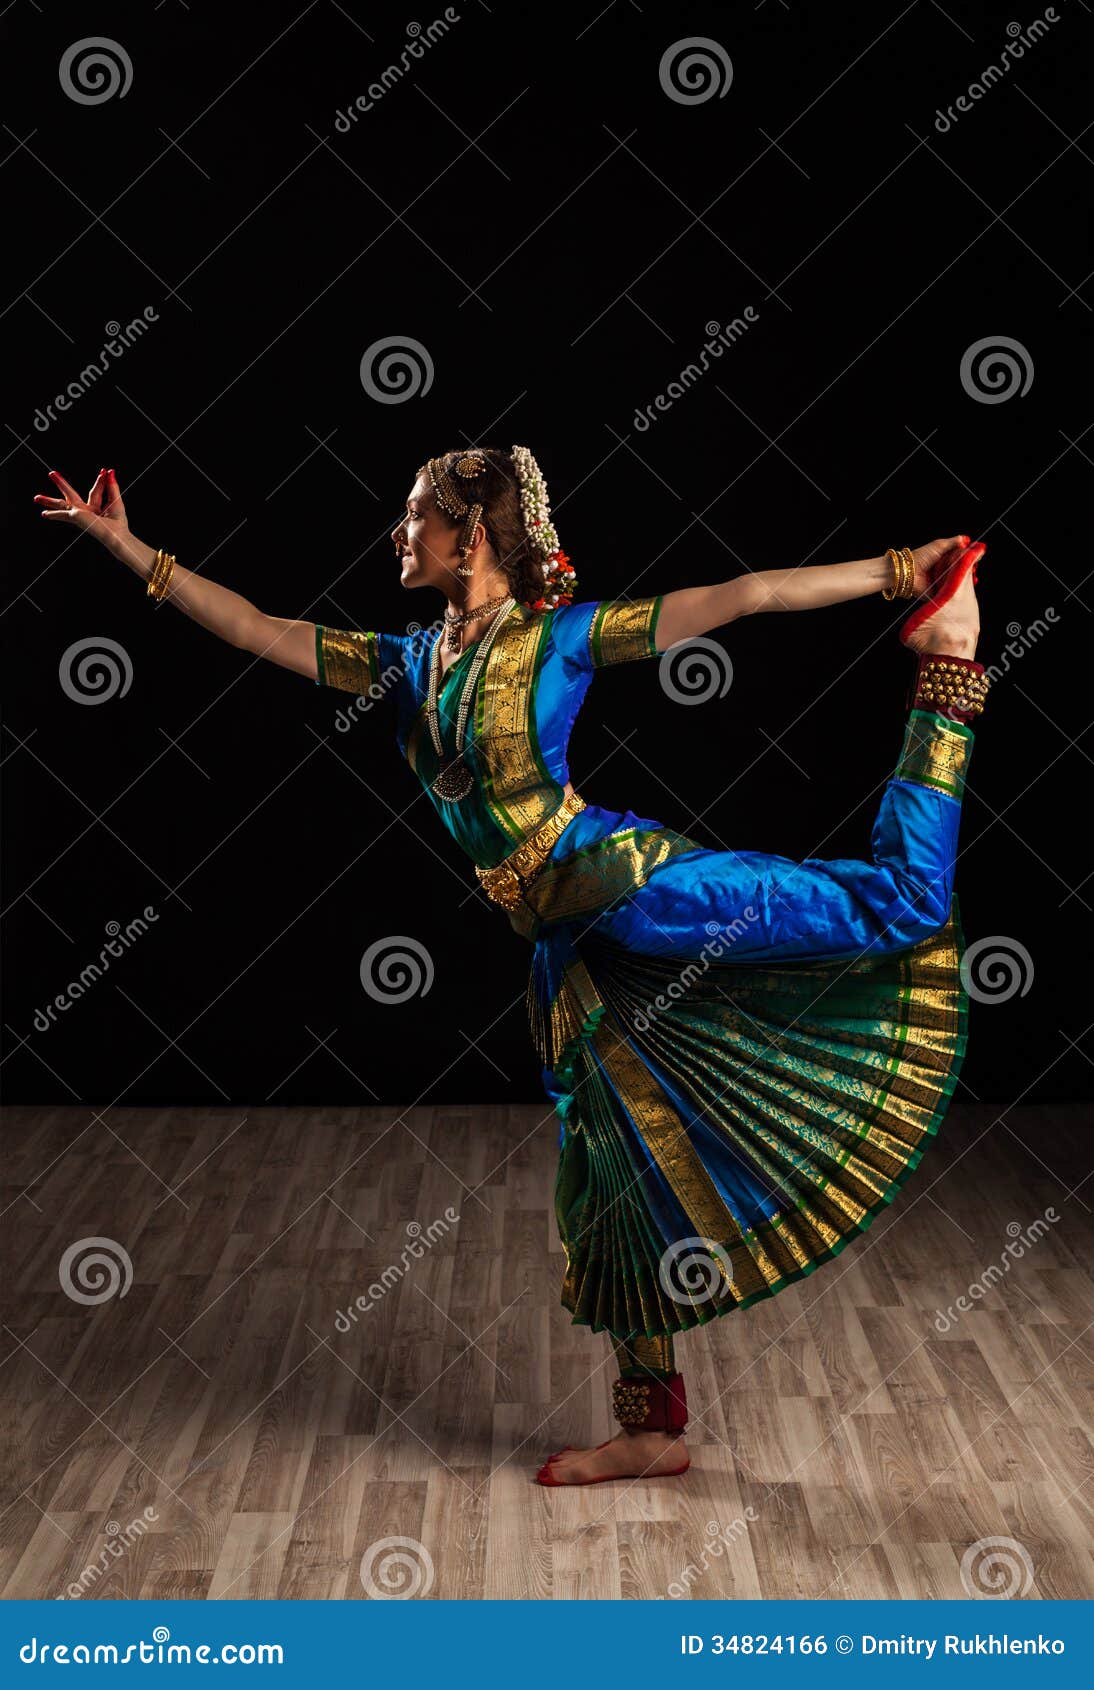 Bharatanatyam dancer. India | Indian classical dance, Indian classical  dancer, Bharatanatyam poses